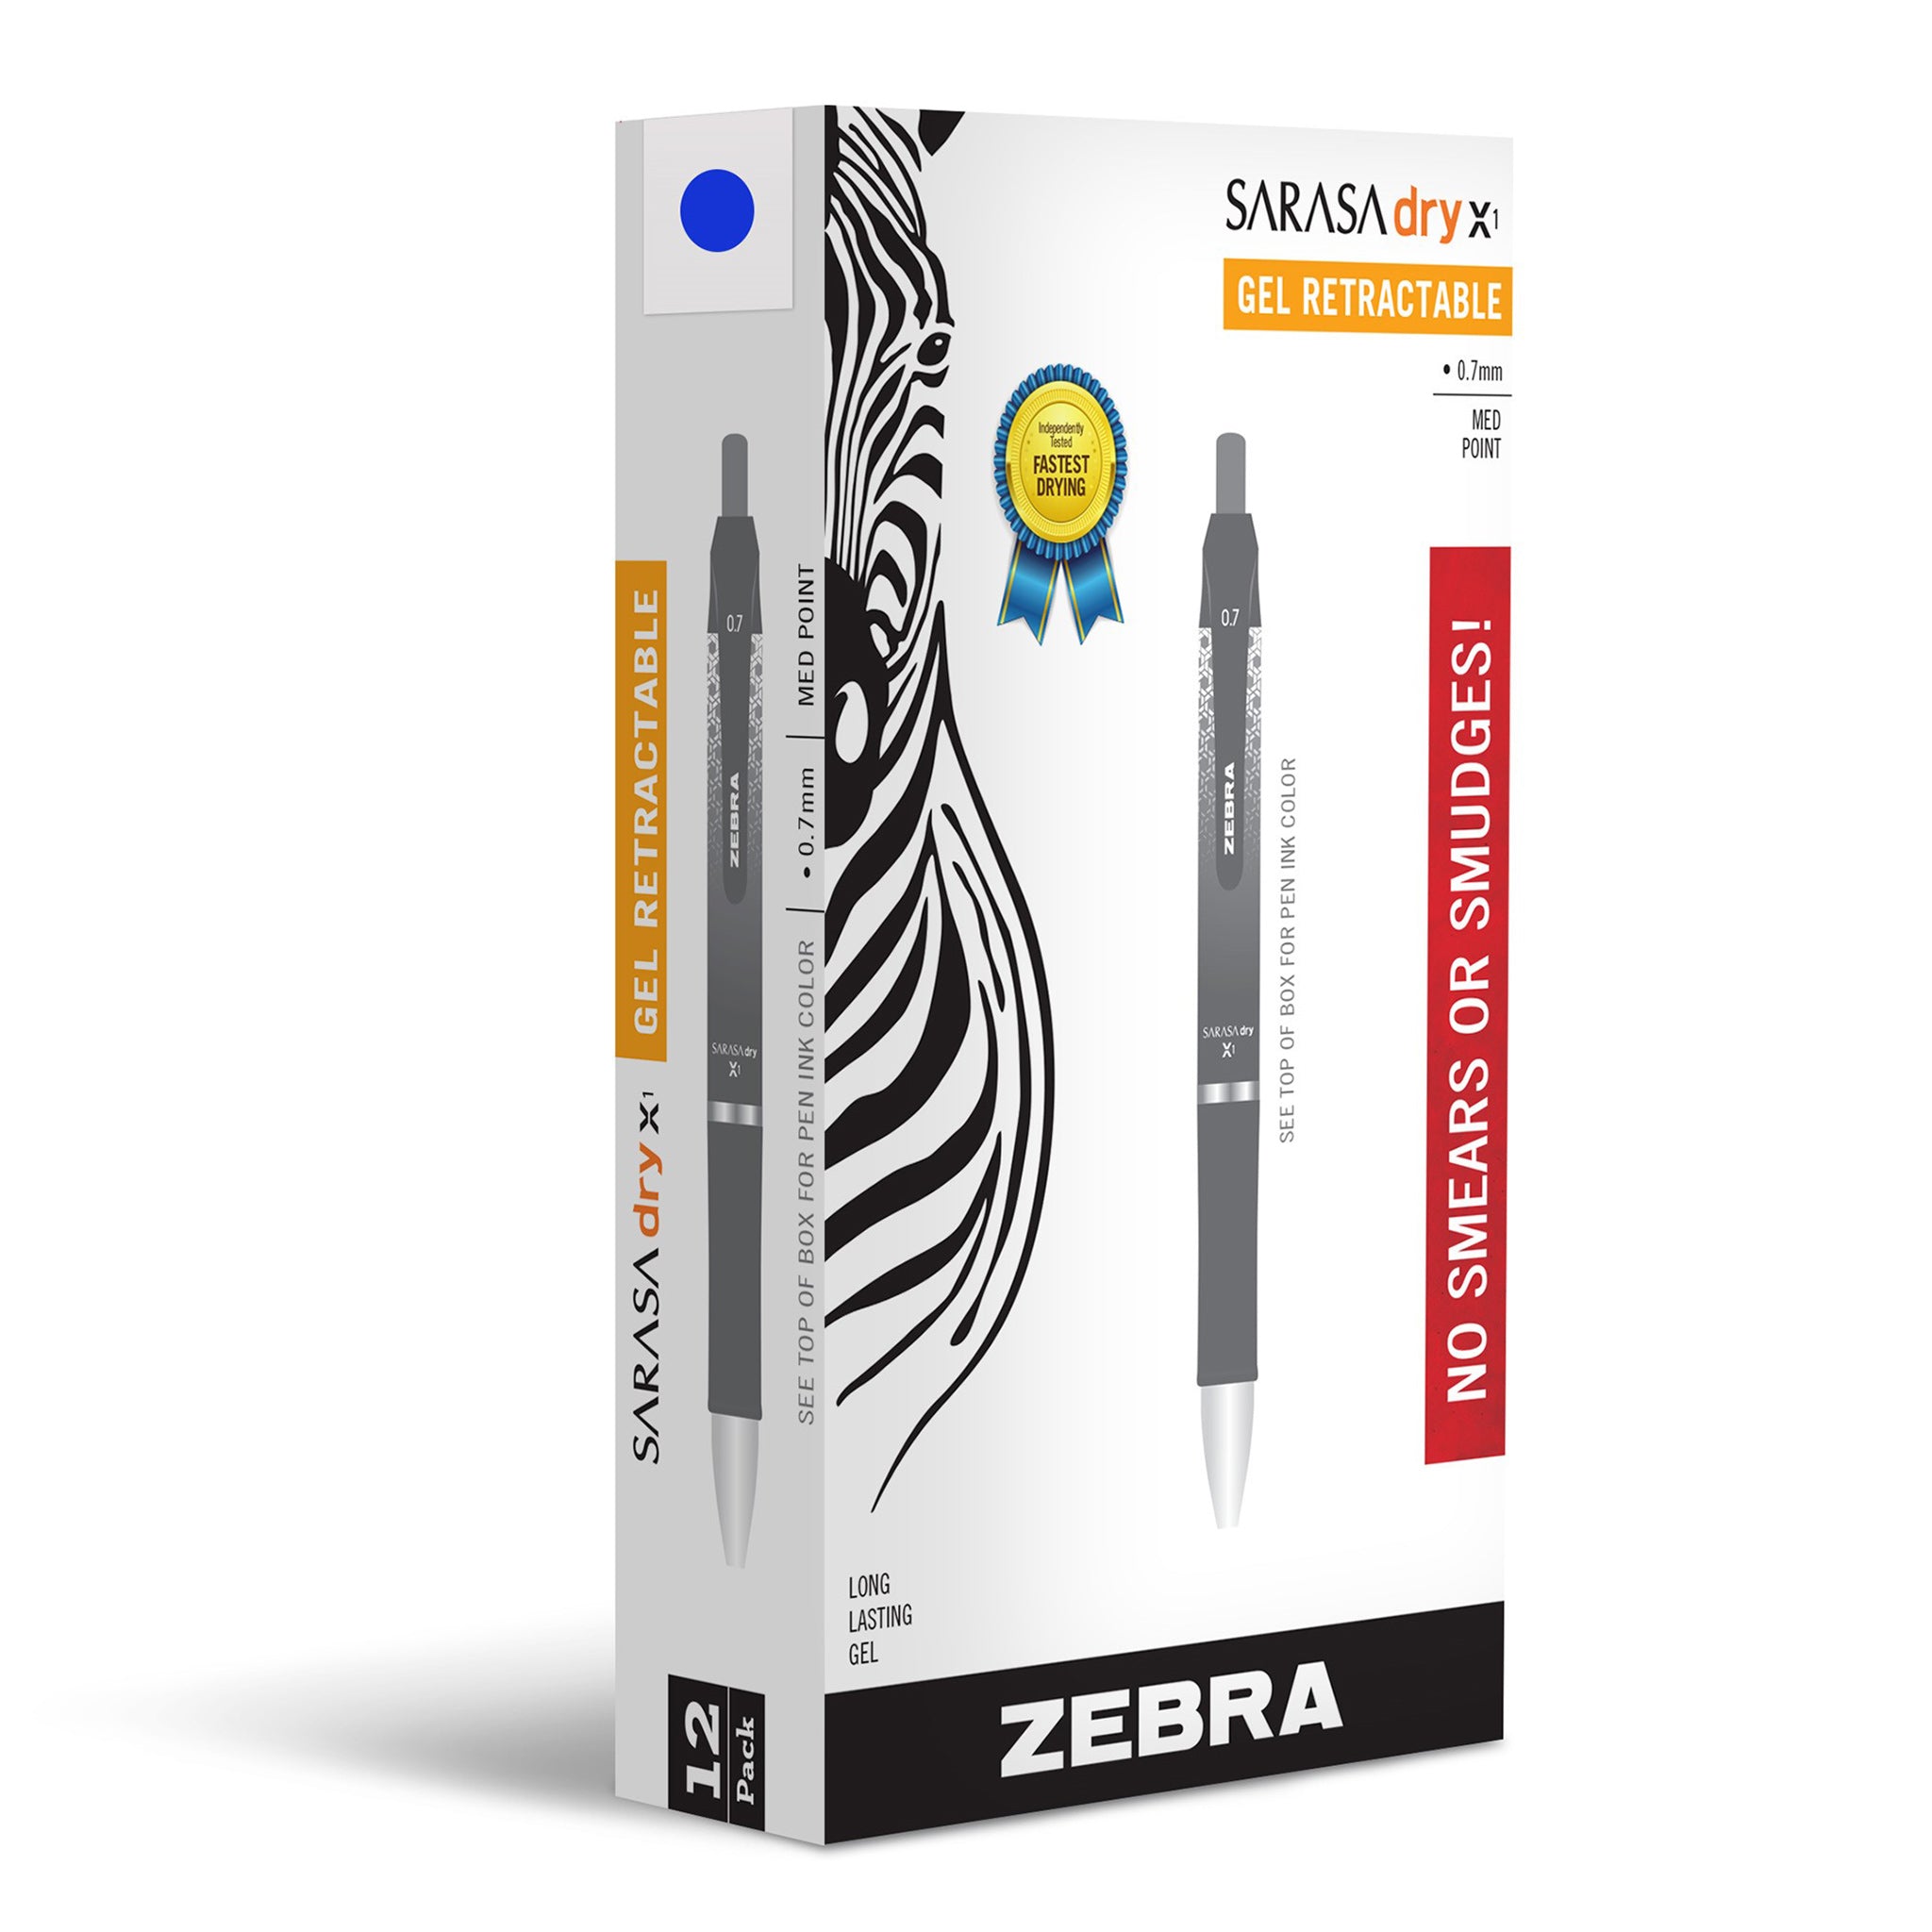 SARASA dry X1 Gel Retractable – Zebra Pen